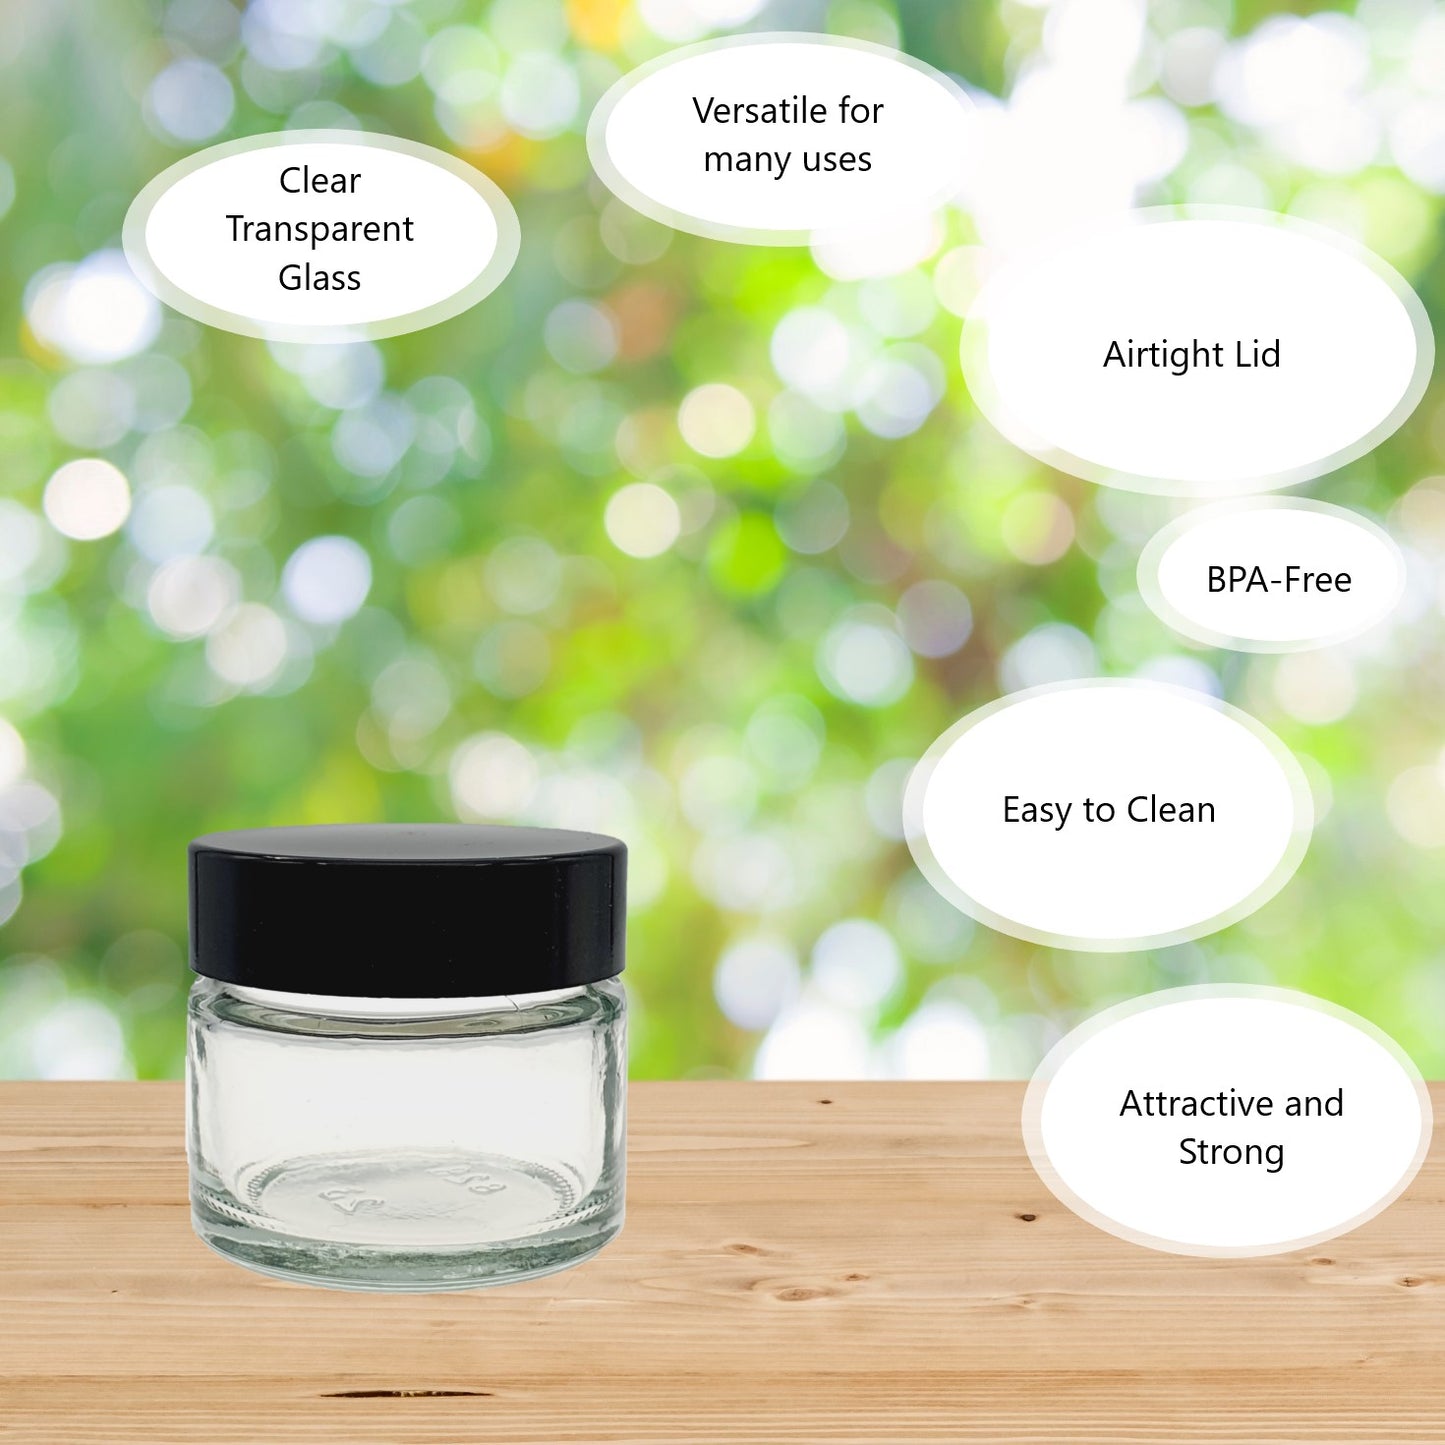 15ml Clear Glass Jar with Black Urea Lid